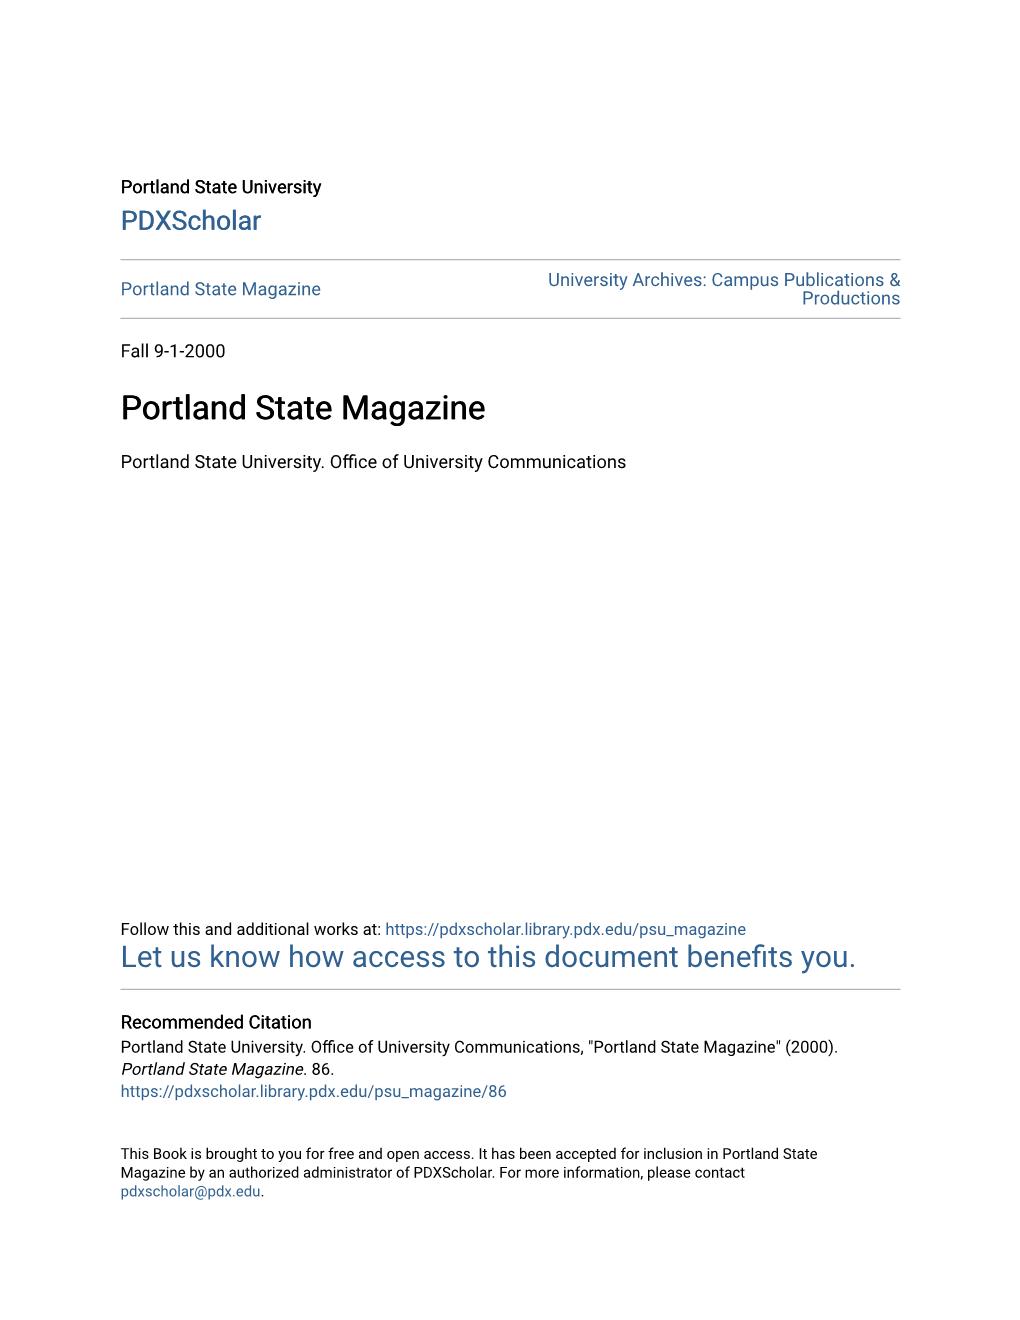 Portland State Magazine Productions